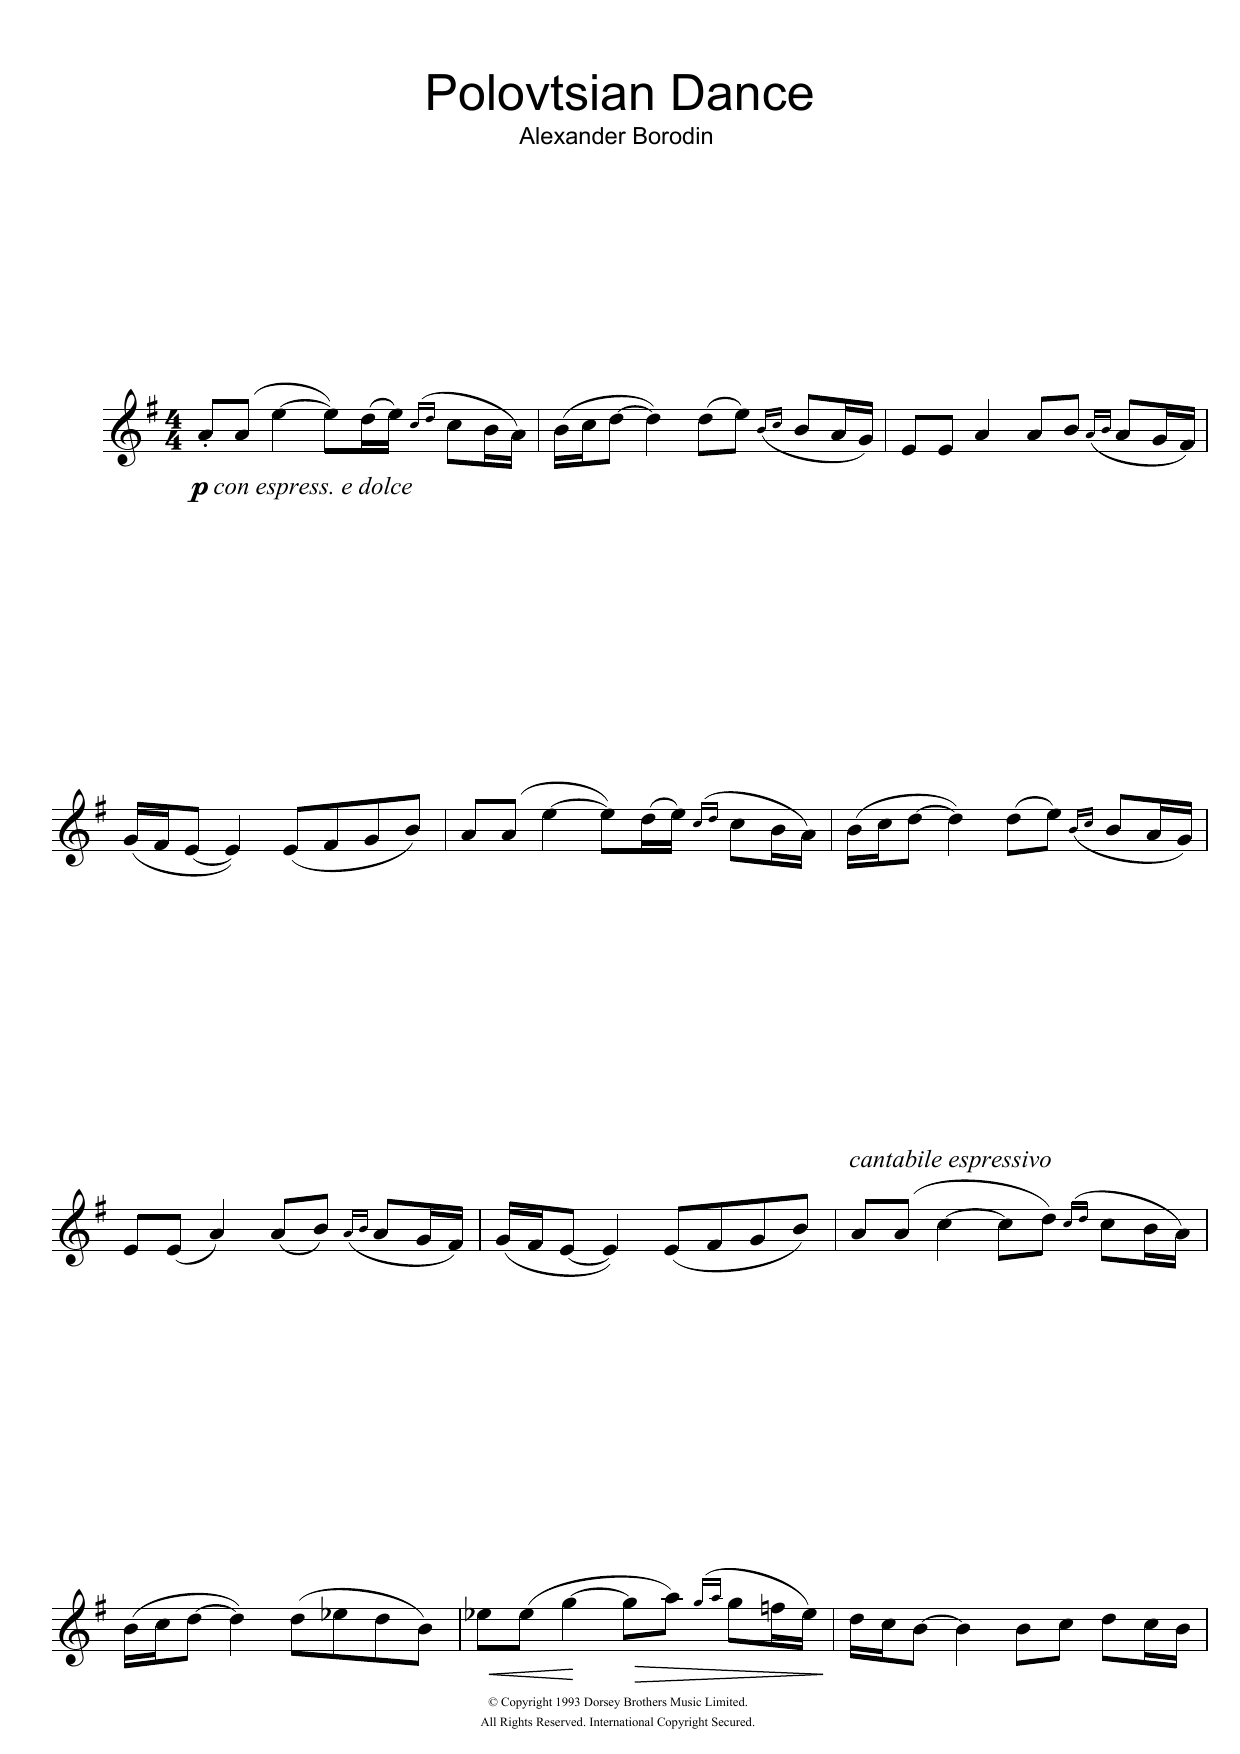 Alexander Borodin Polovtsian Dance Sheet Music Notes & Chords for Flute - Download or Print PDF